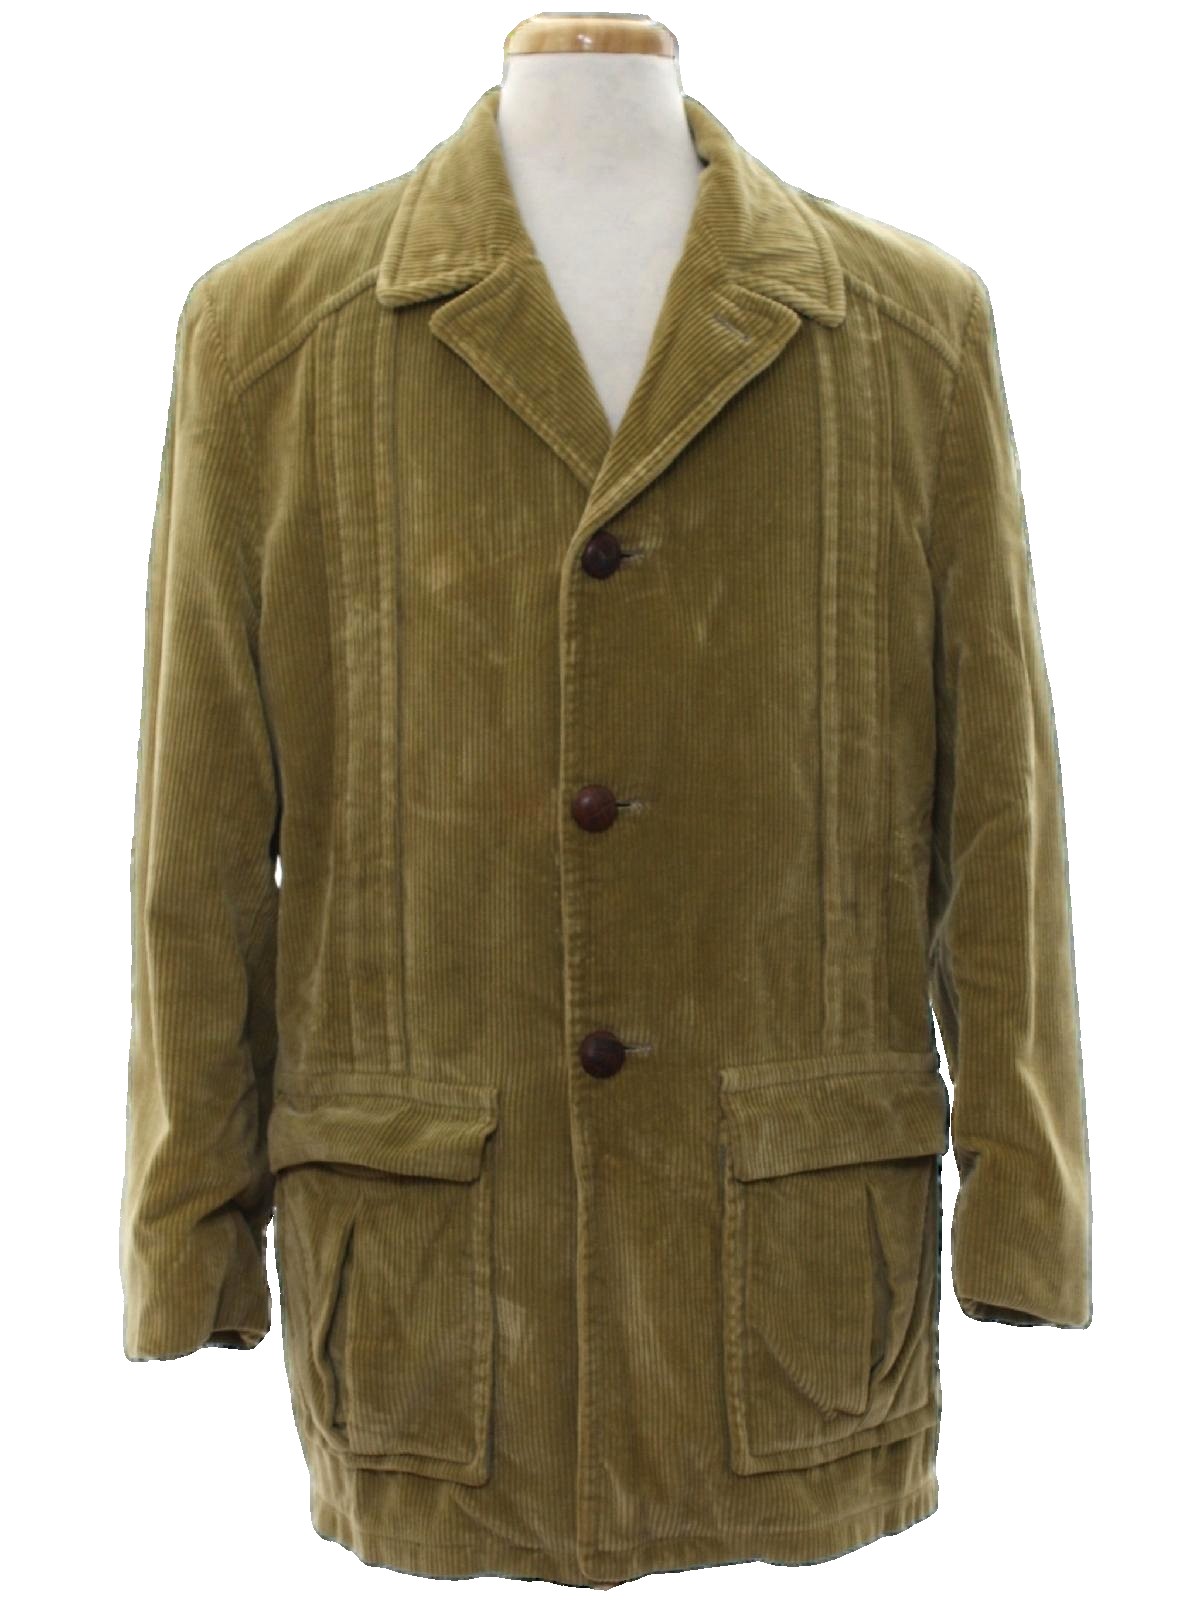 Retro 1960s Jacket: Late 60s -Strato Jac- Mens tan wide wale cotton ...